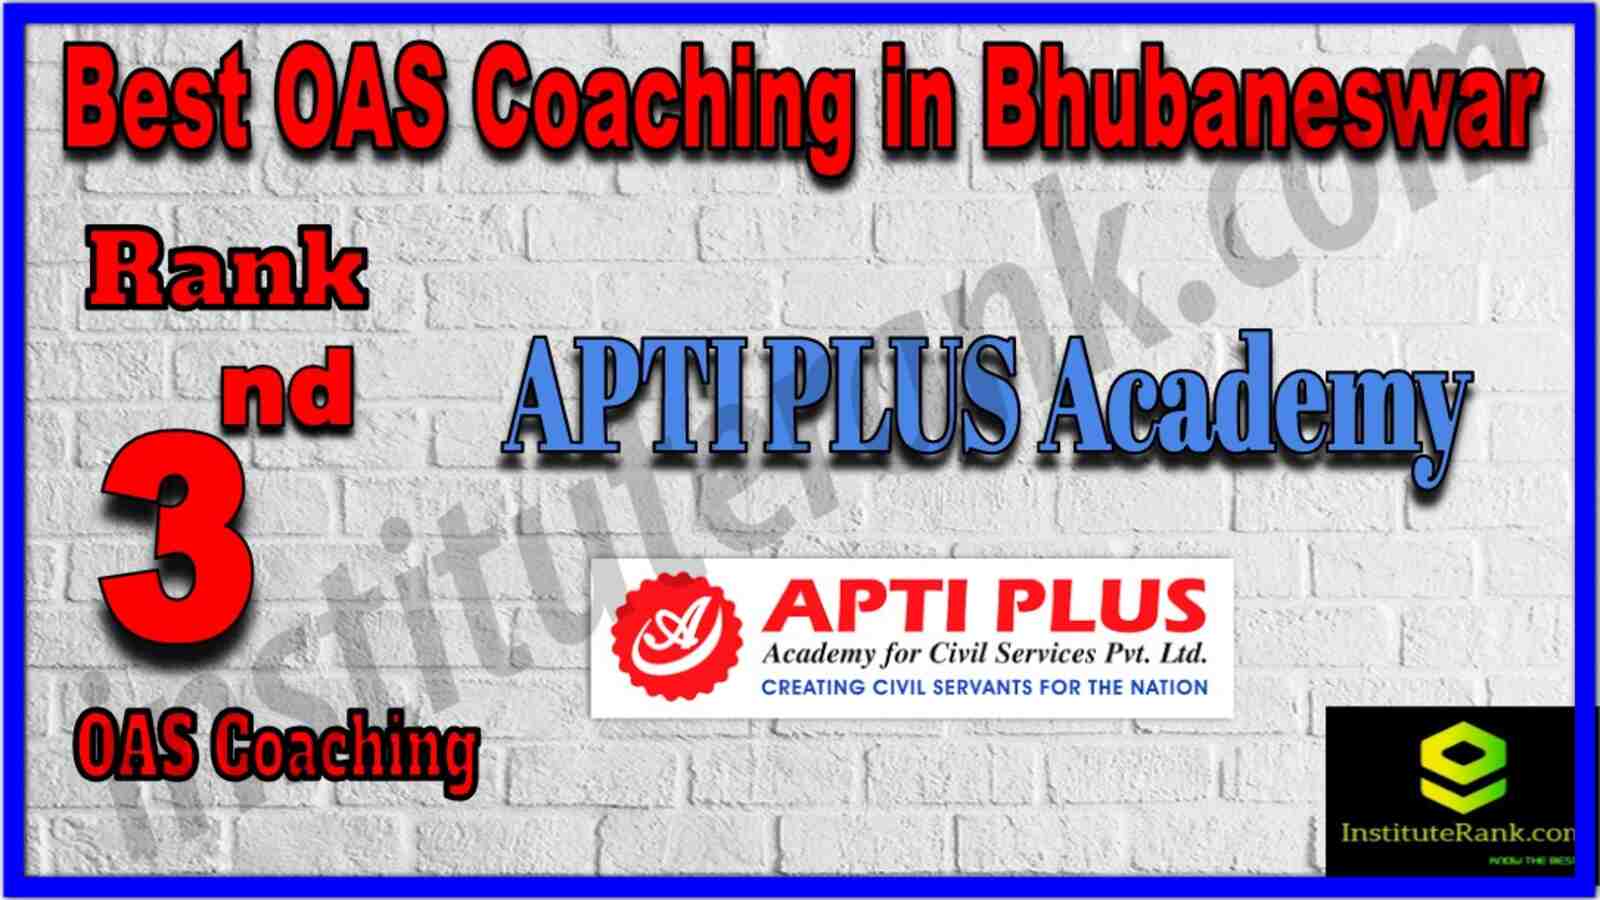 Rank 3 Best OAS Coaching in Bhubaneswar